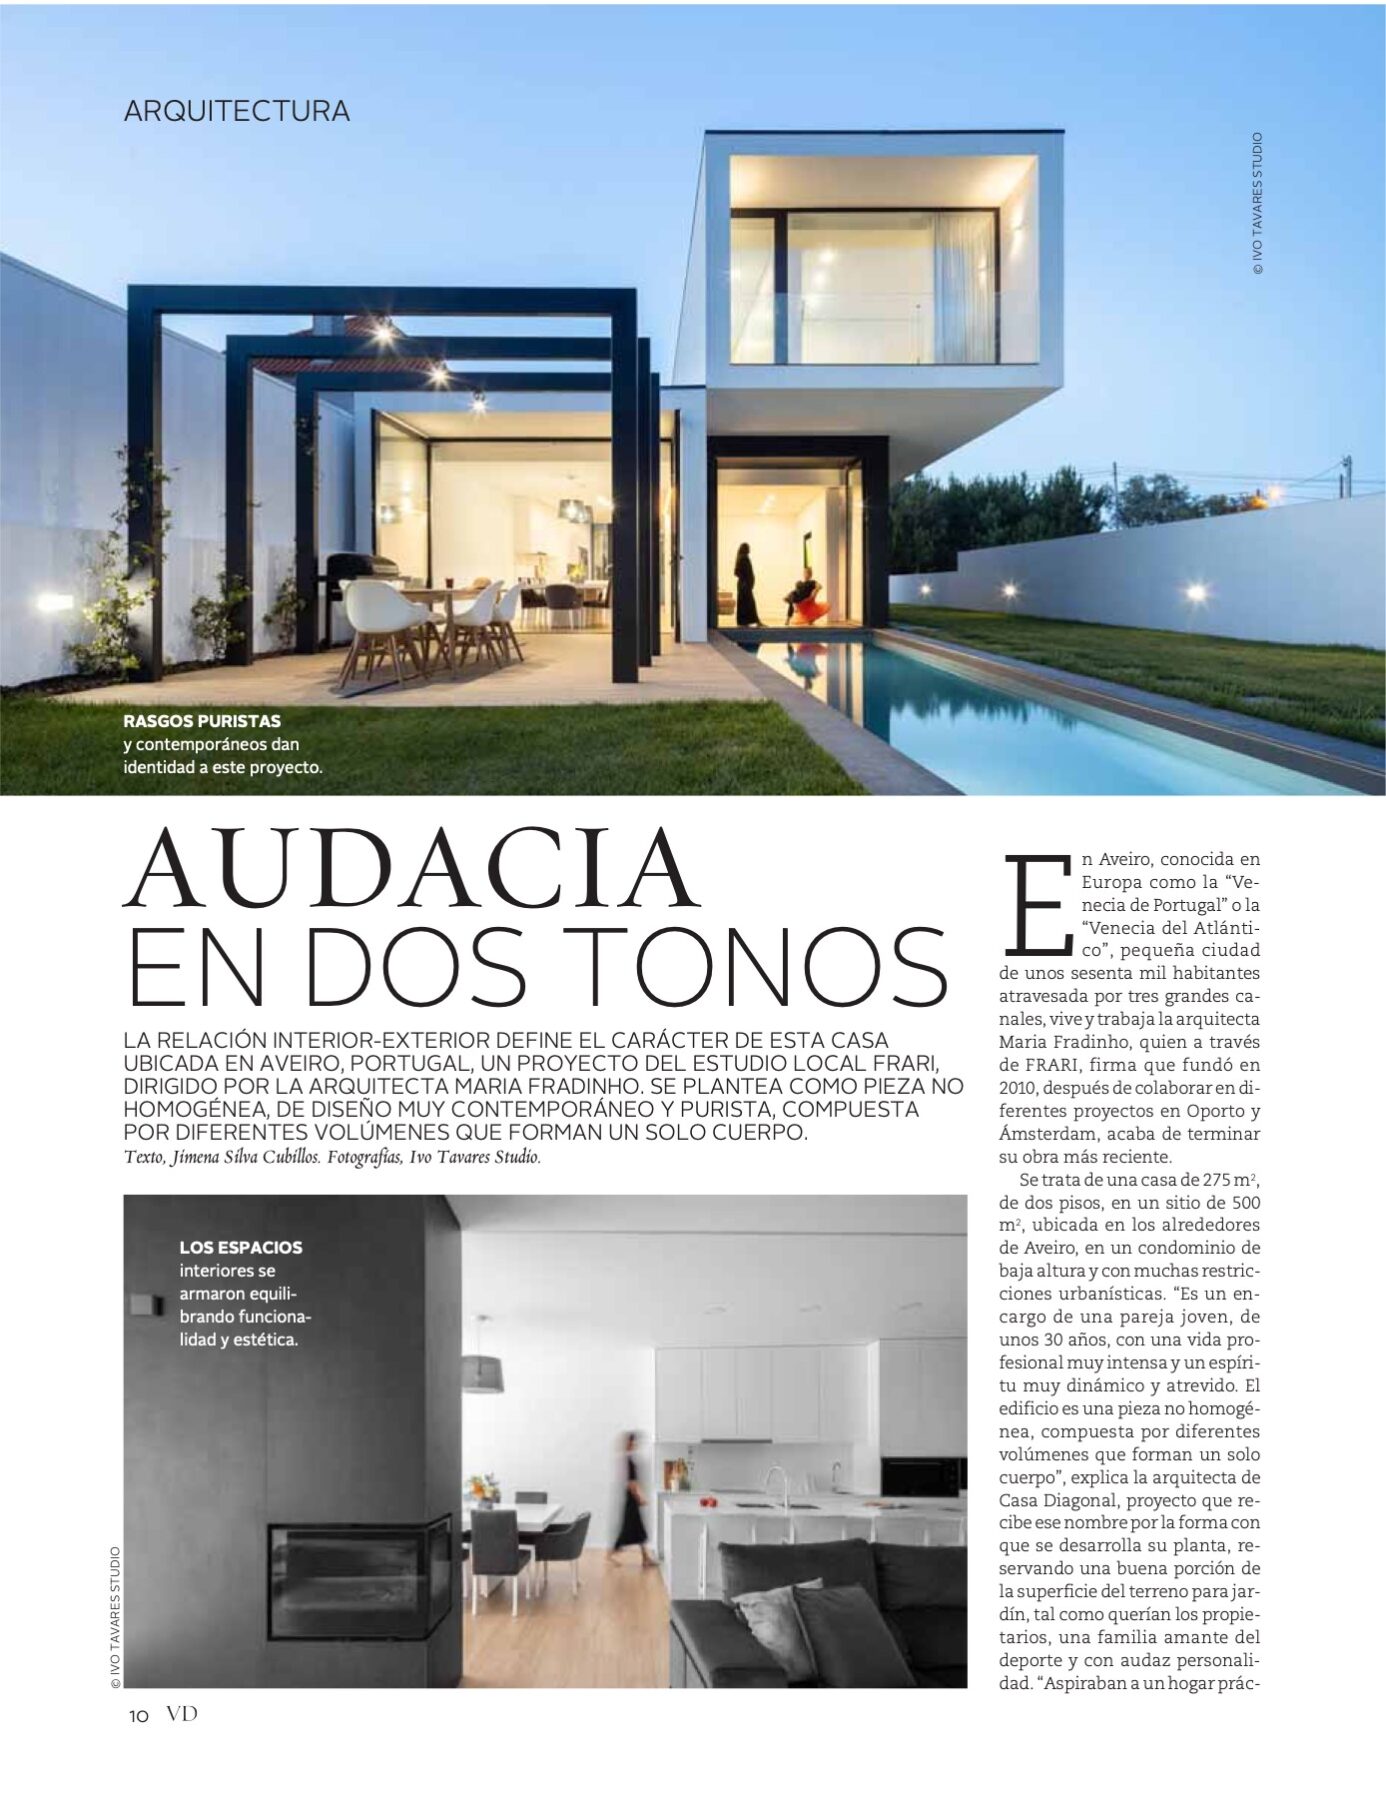 El Mercurio – VD #1319 do atelier Frari com fotografia arquitetura de ivo tavares studio - architectural photography